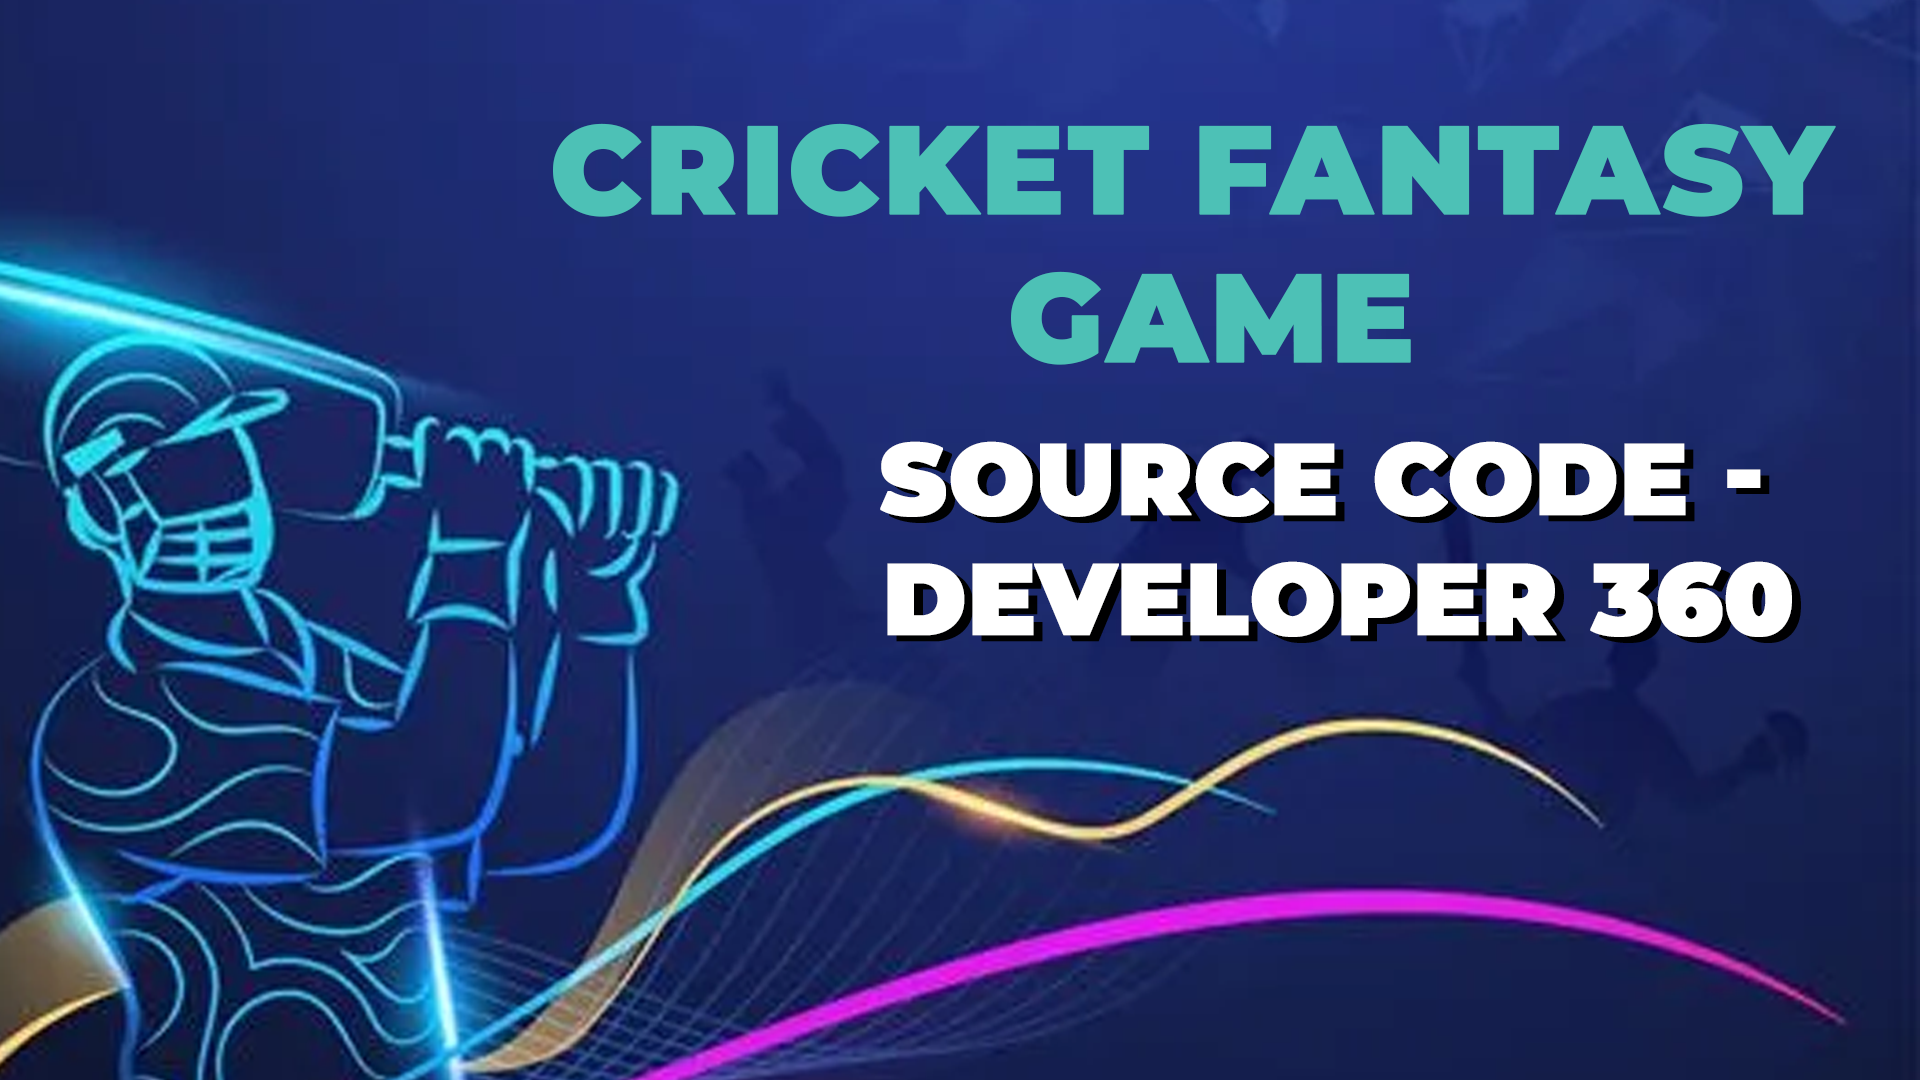 Cricket Fantasy Game Source Code - Developer 360